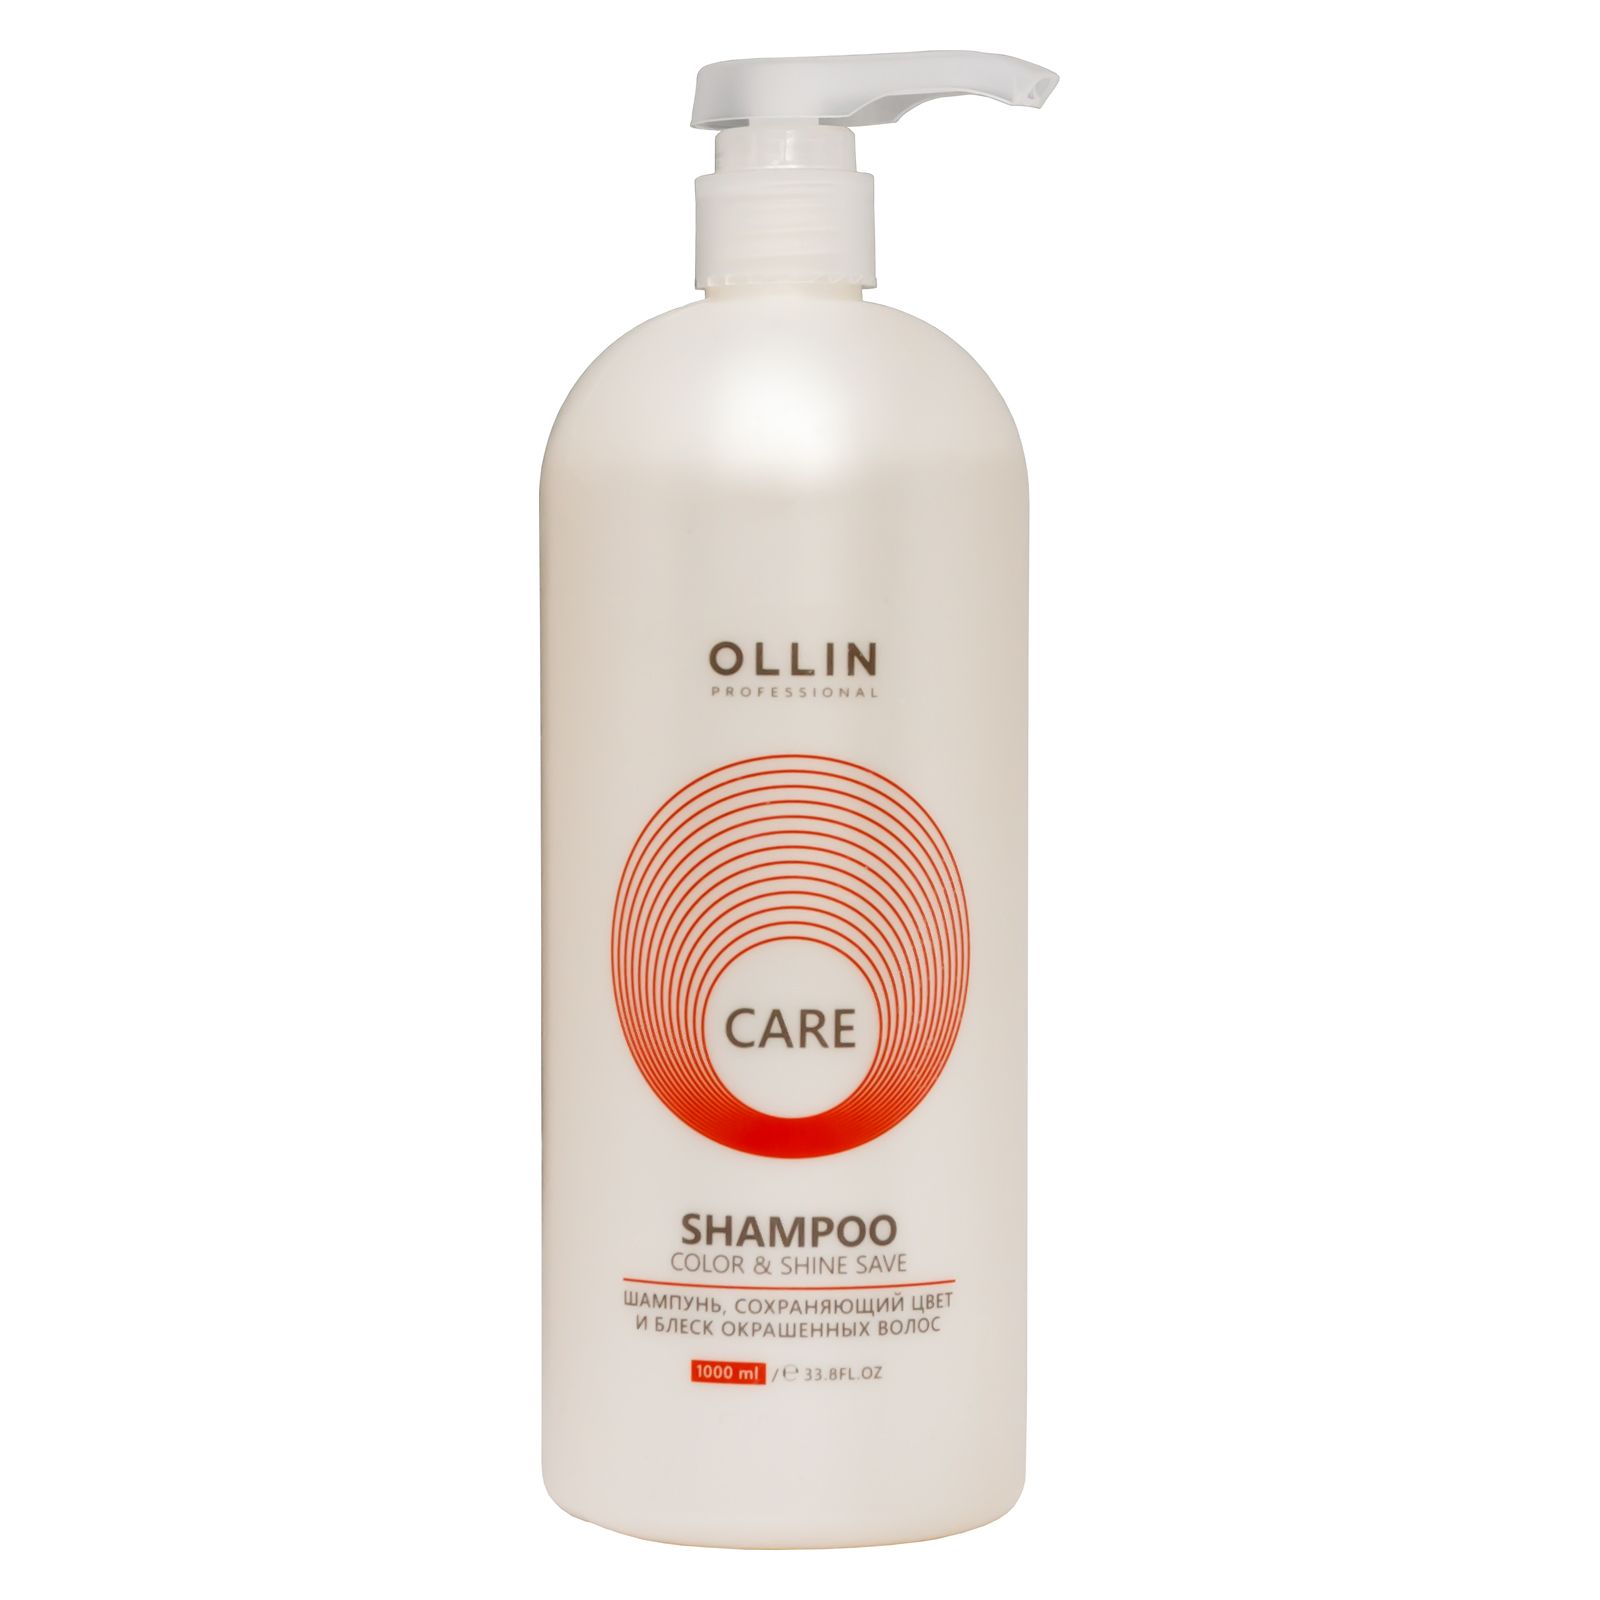 Ollin Care Color&Shine Save Shampoo 38162